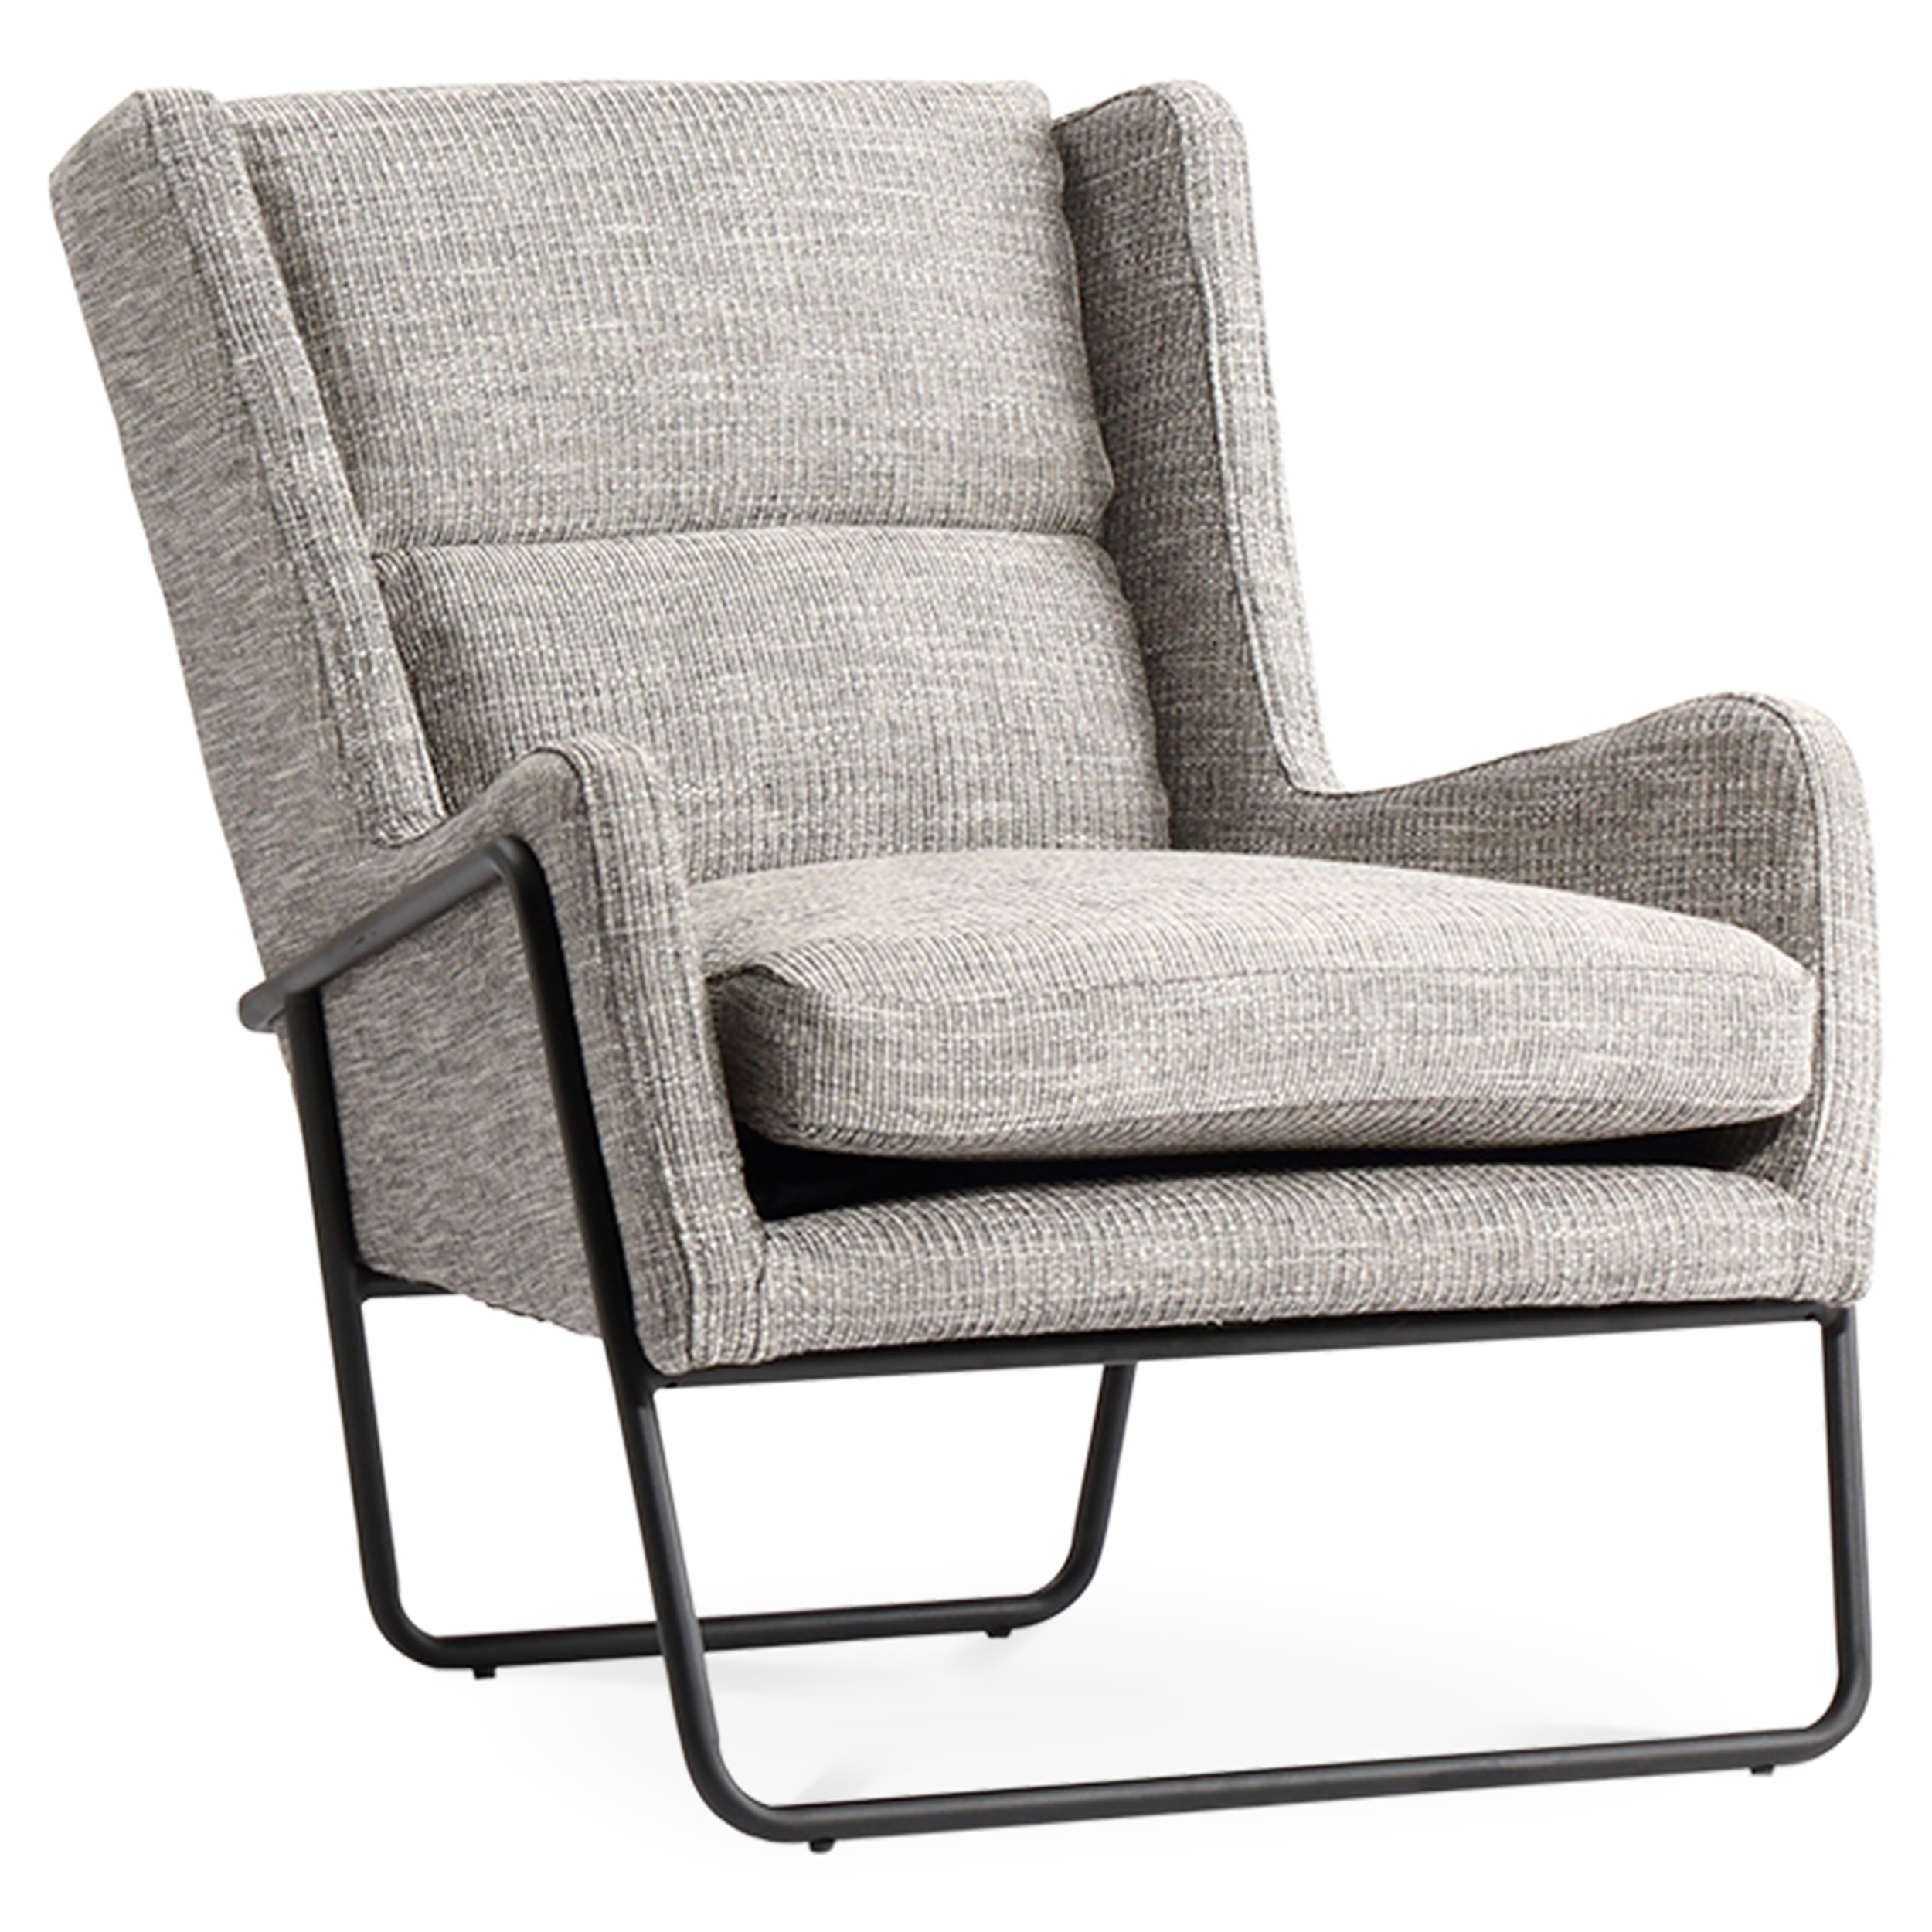 WS - London armchair - Osaka grey (Front angle)